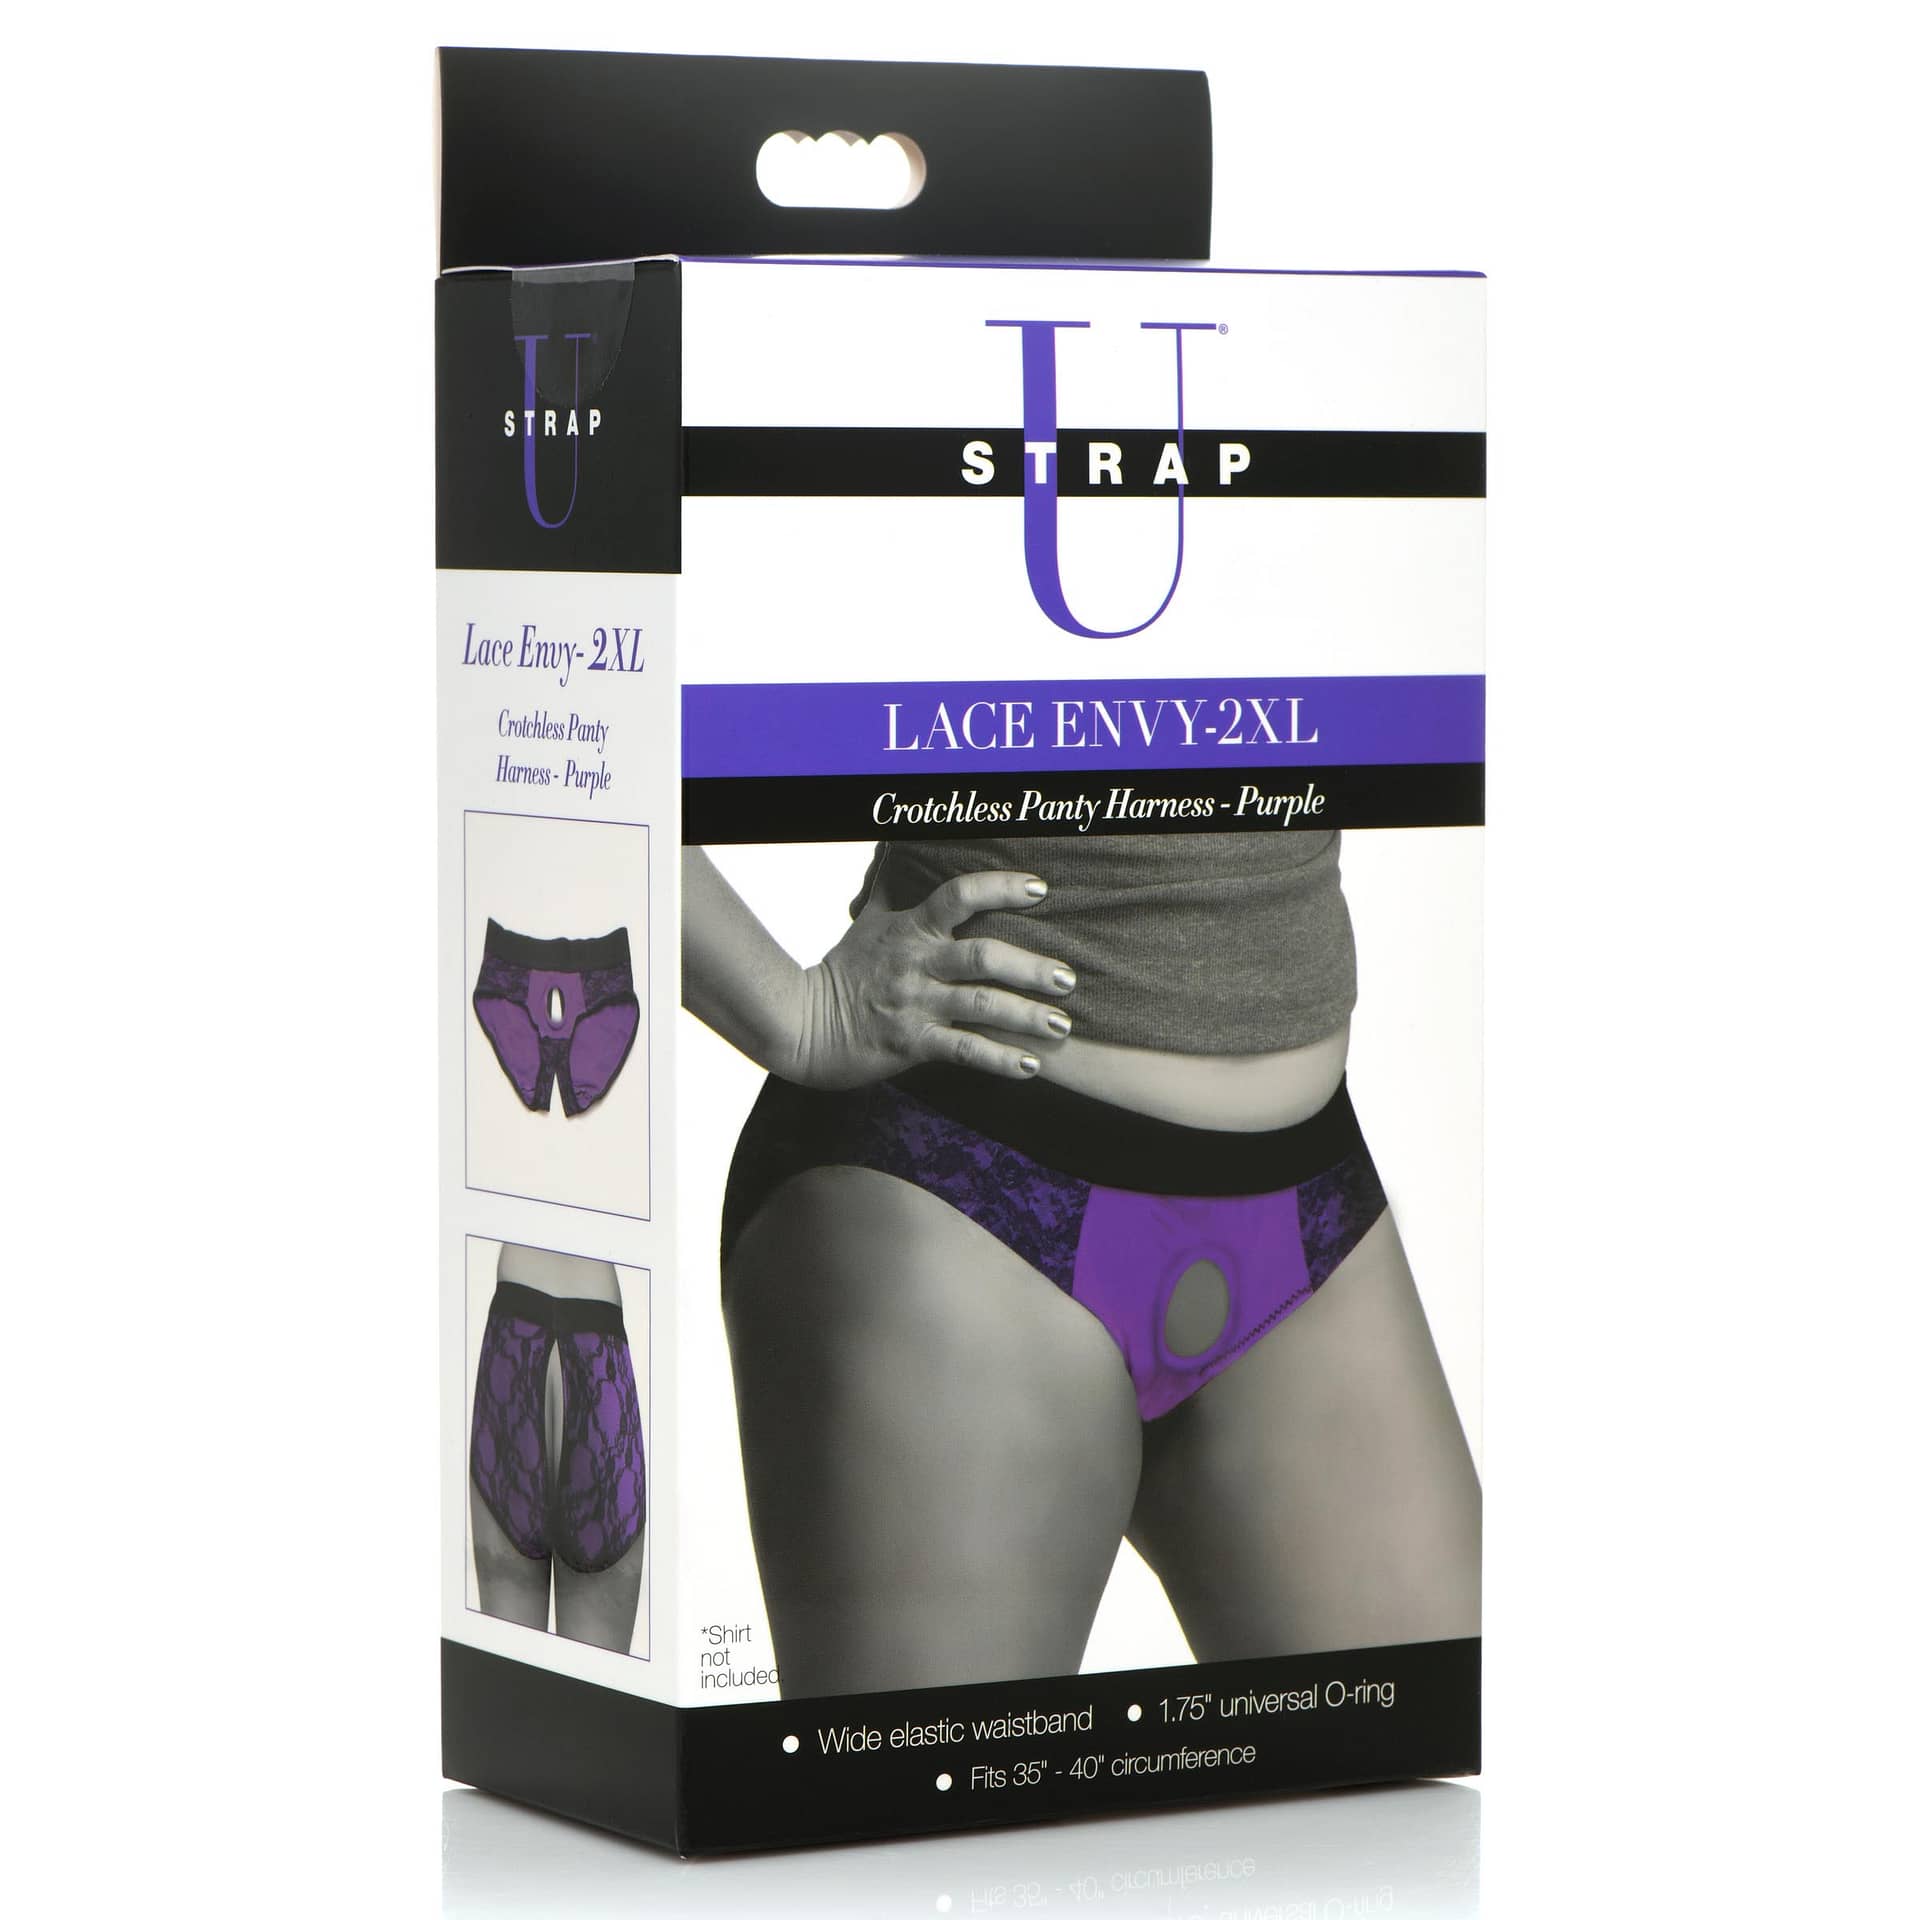 Lace Envy Crotchless Panty Harness XL The BDSM Toy Shop